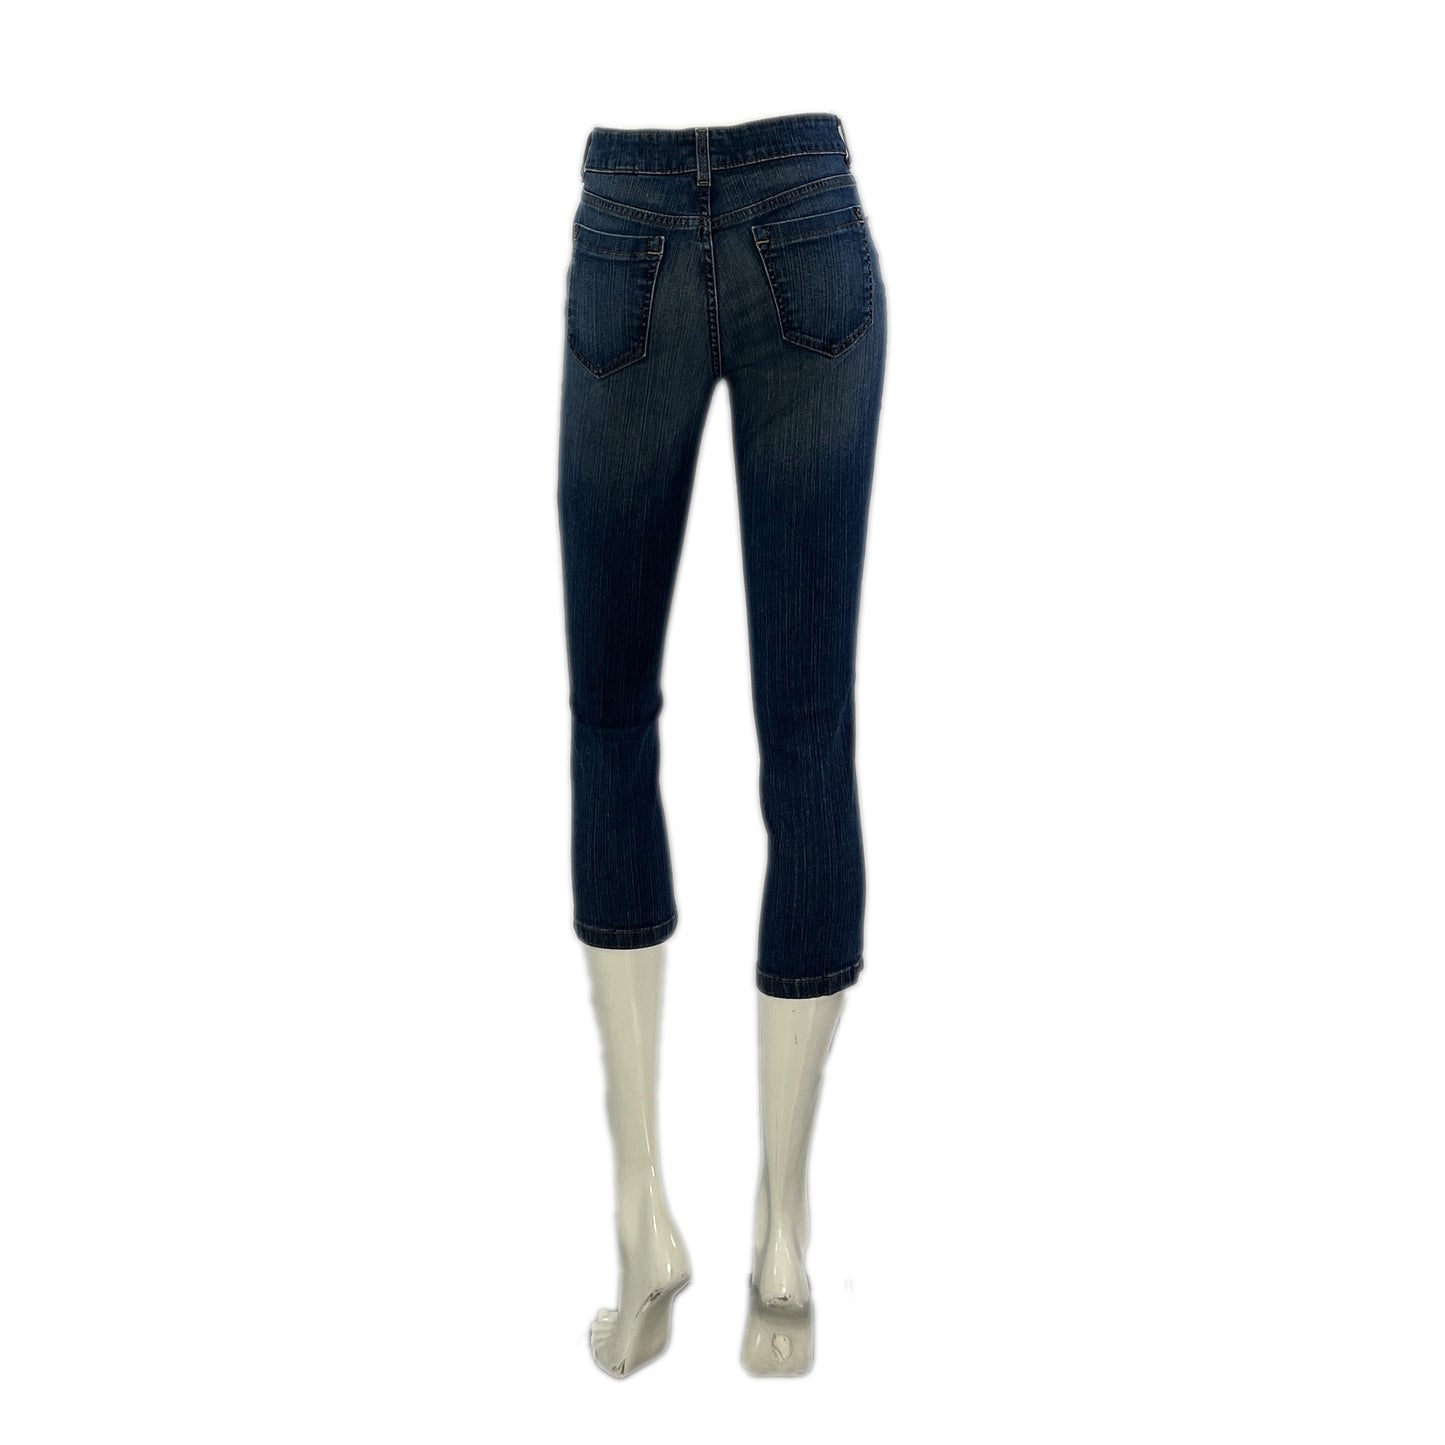 DKNY Denim Jeans Dark Denim Blue Size 4 SKU 000236-5